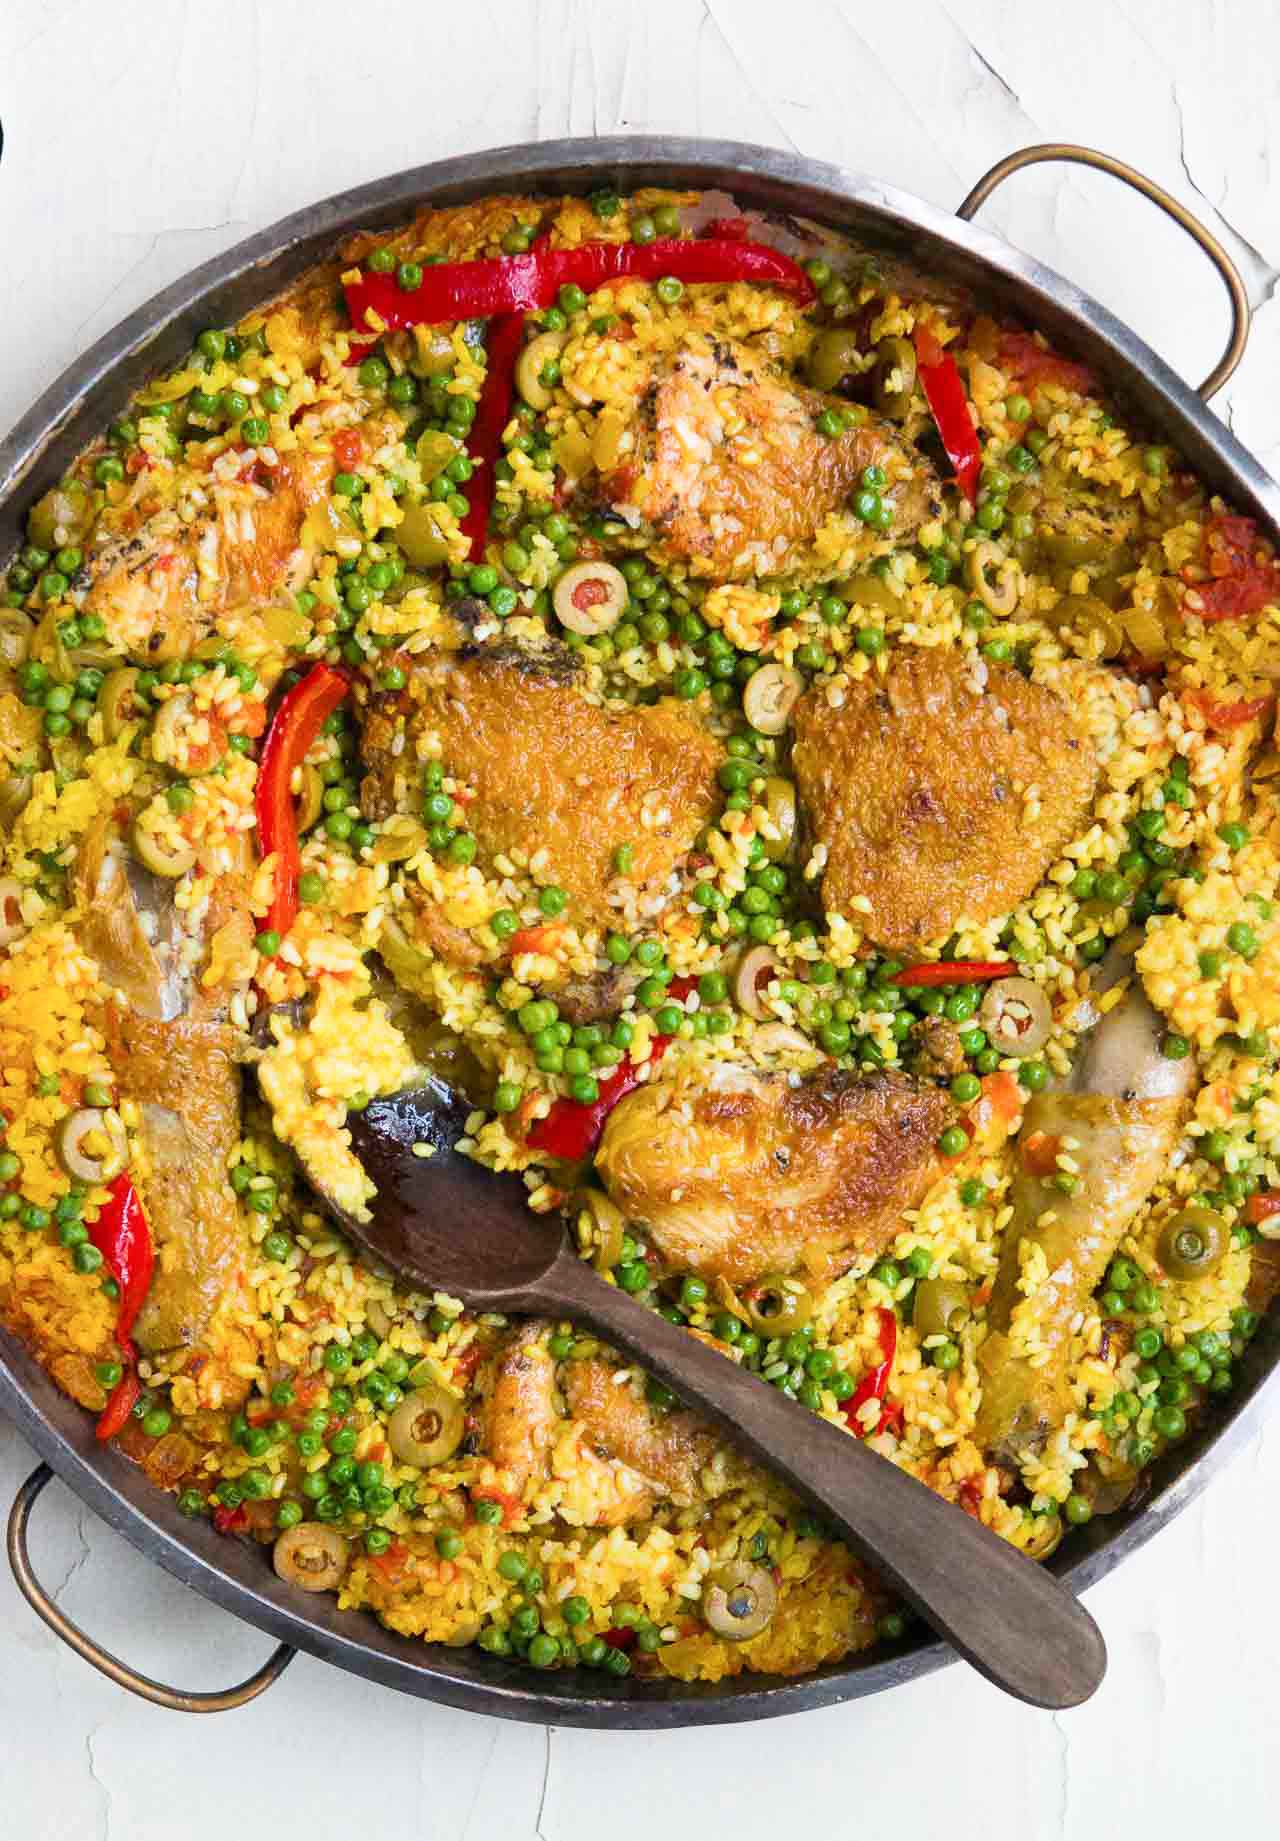 Arroz con pollo: Spanish Chicken with rice | David Lebovitz | Bloglovin’